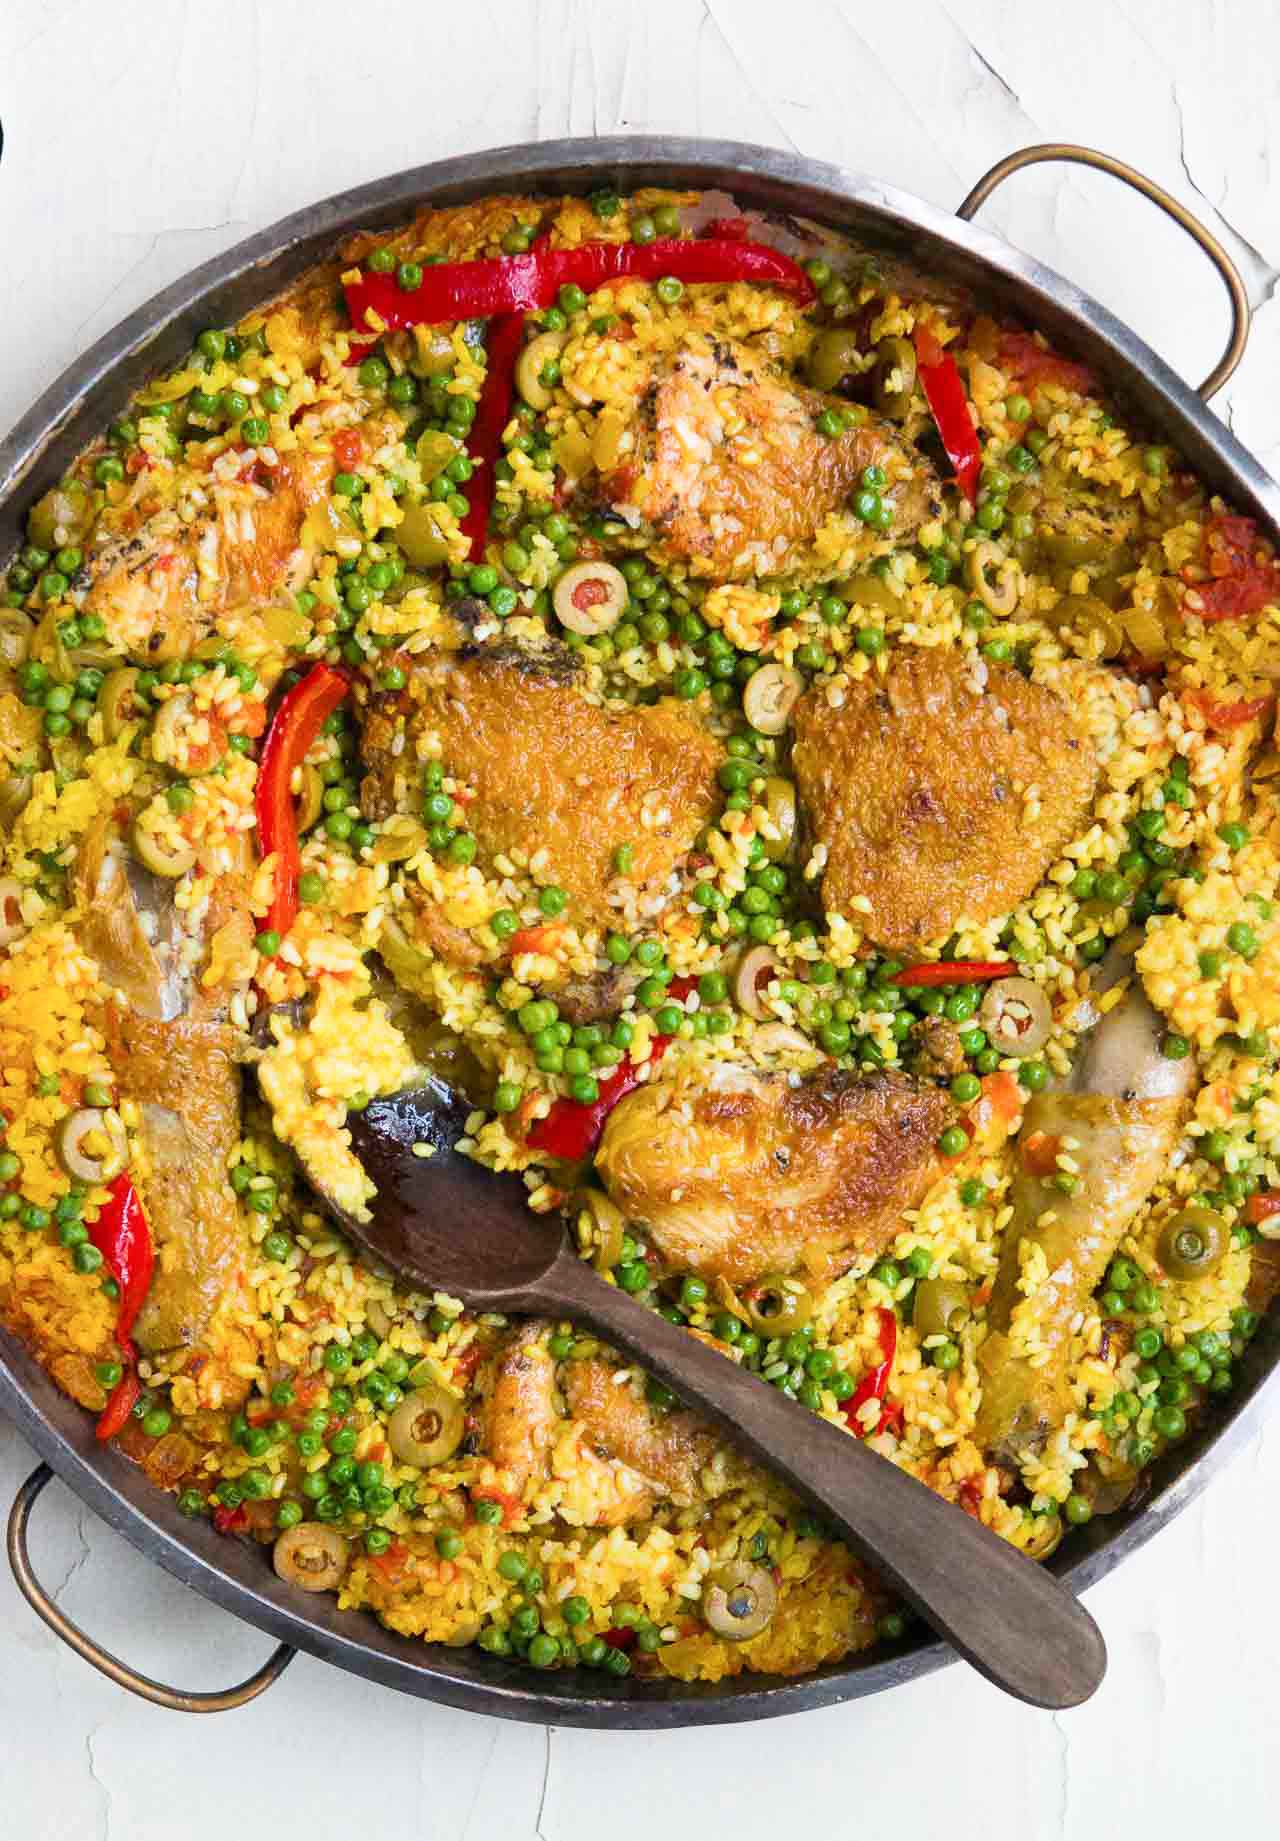 Arroz con pollo: Spanish Chicken with rice | David Lebovitz | Bloglovin’